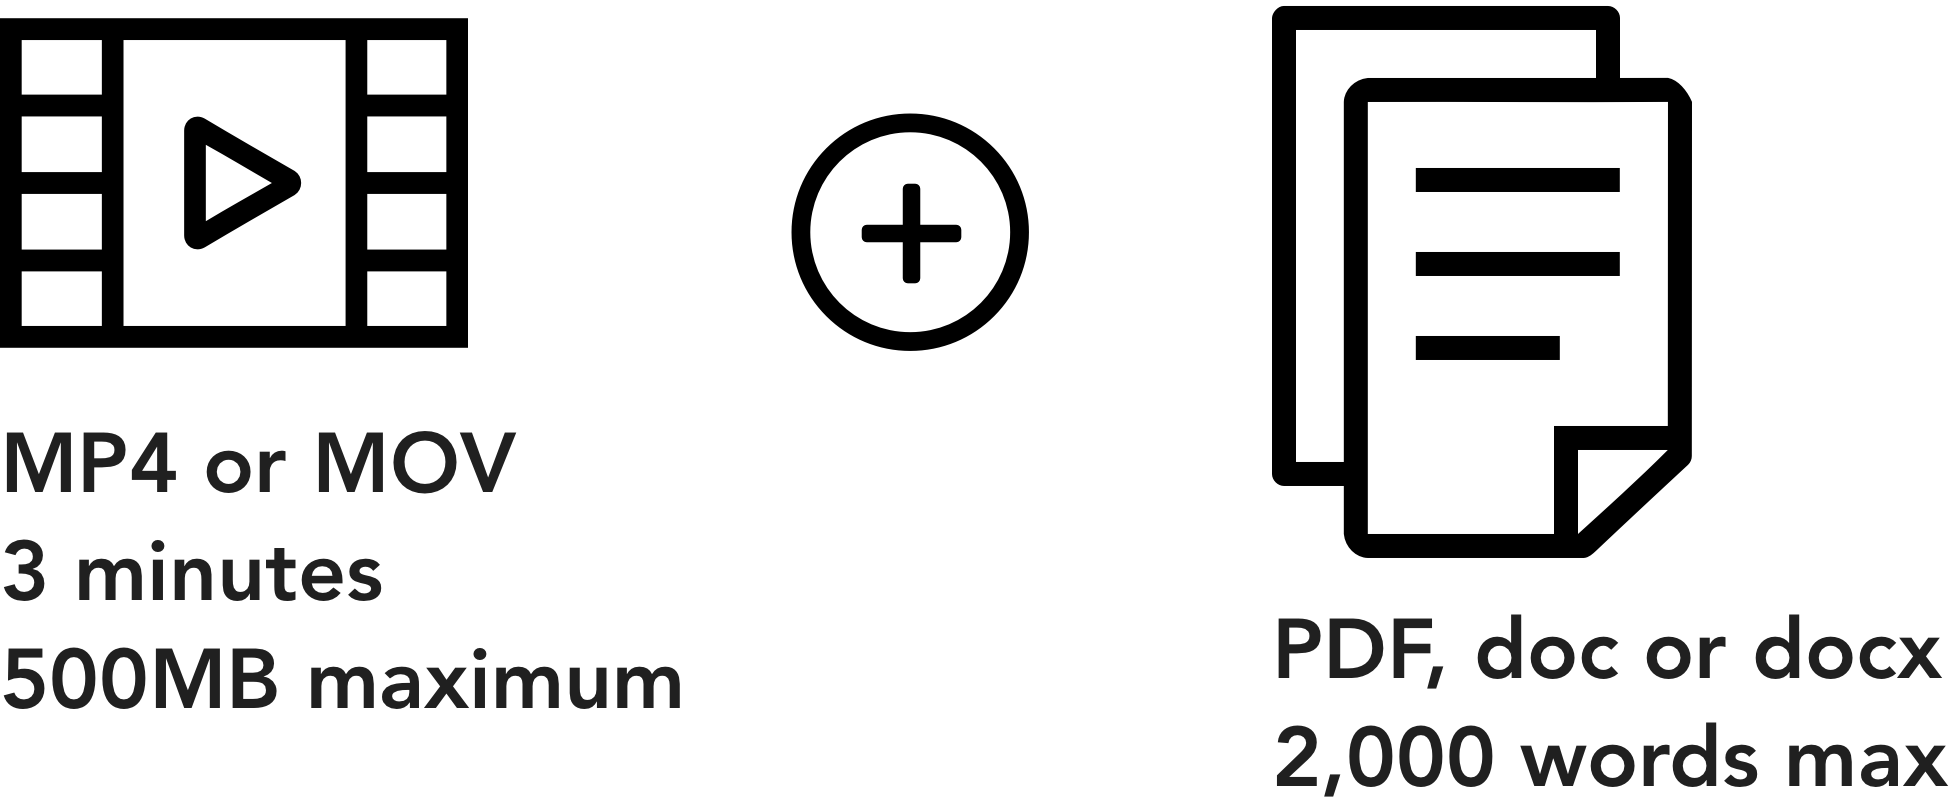 MP4, PDF icons